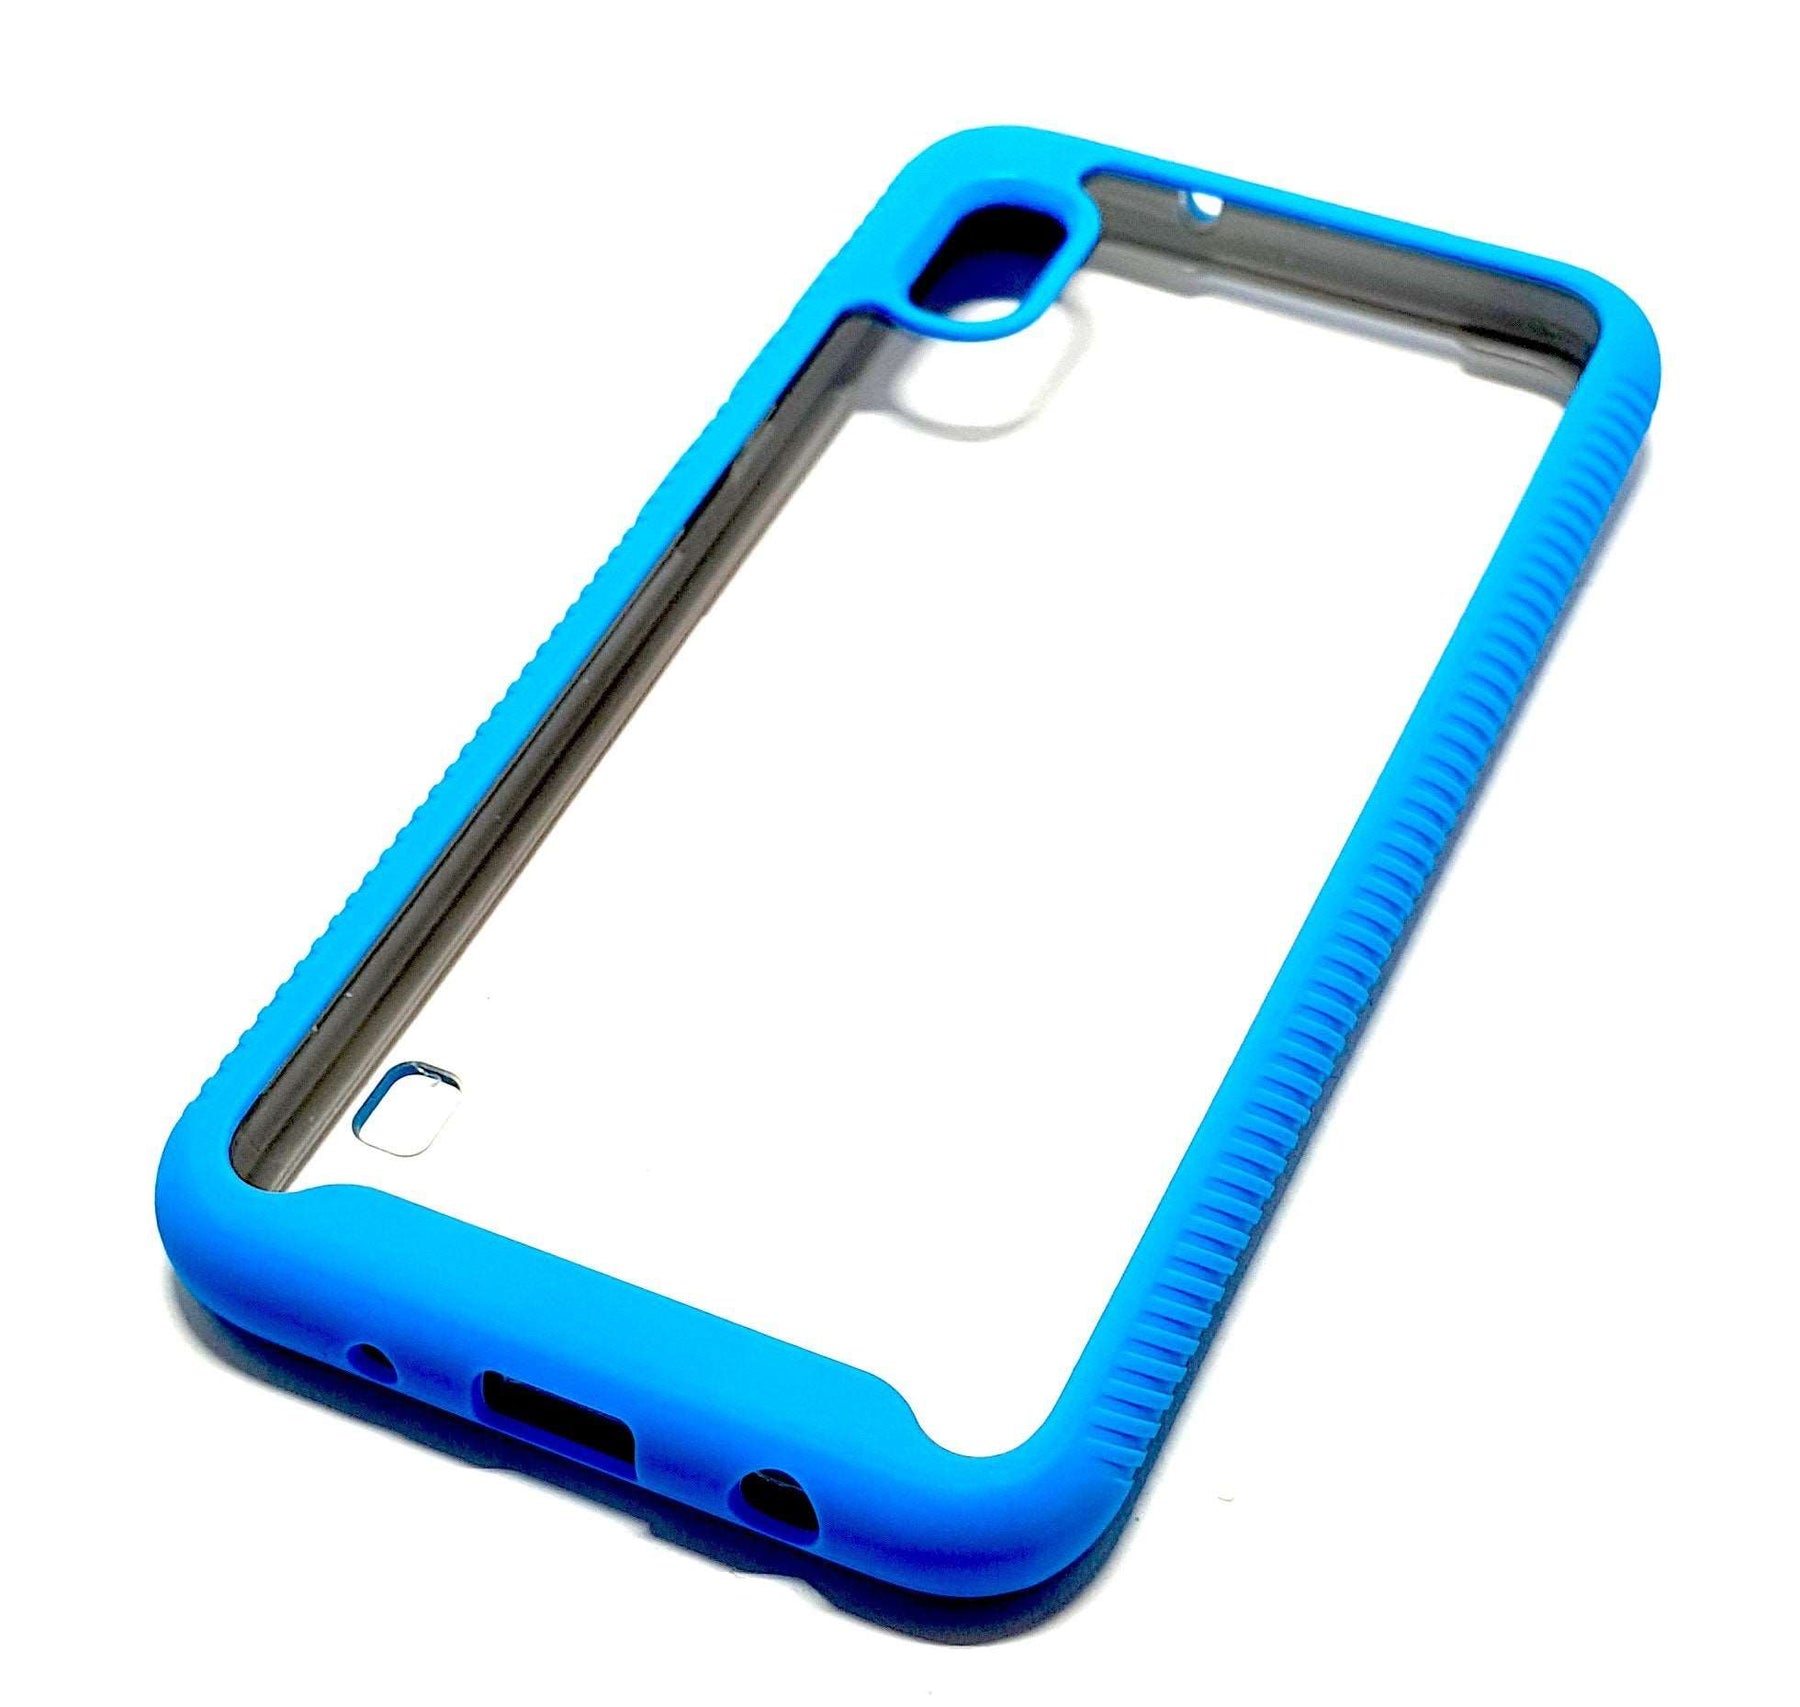 Samsung A10 Shockproof blue clear transparent phone case